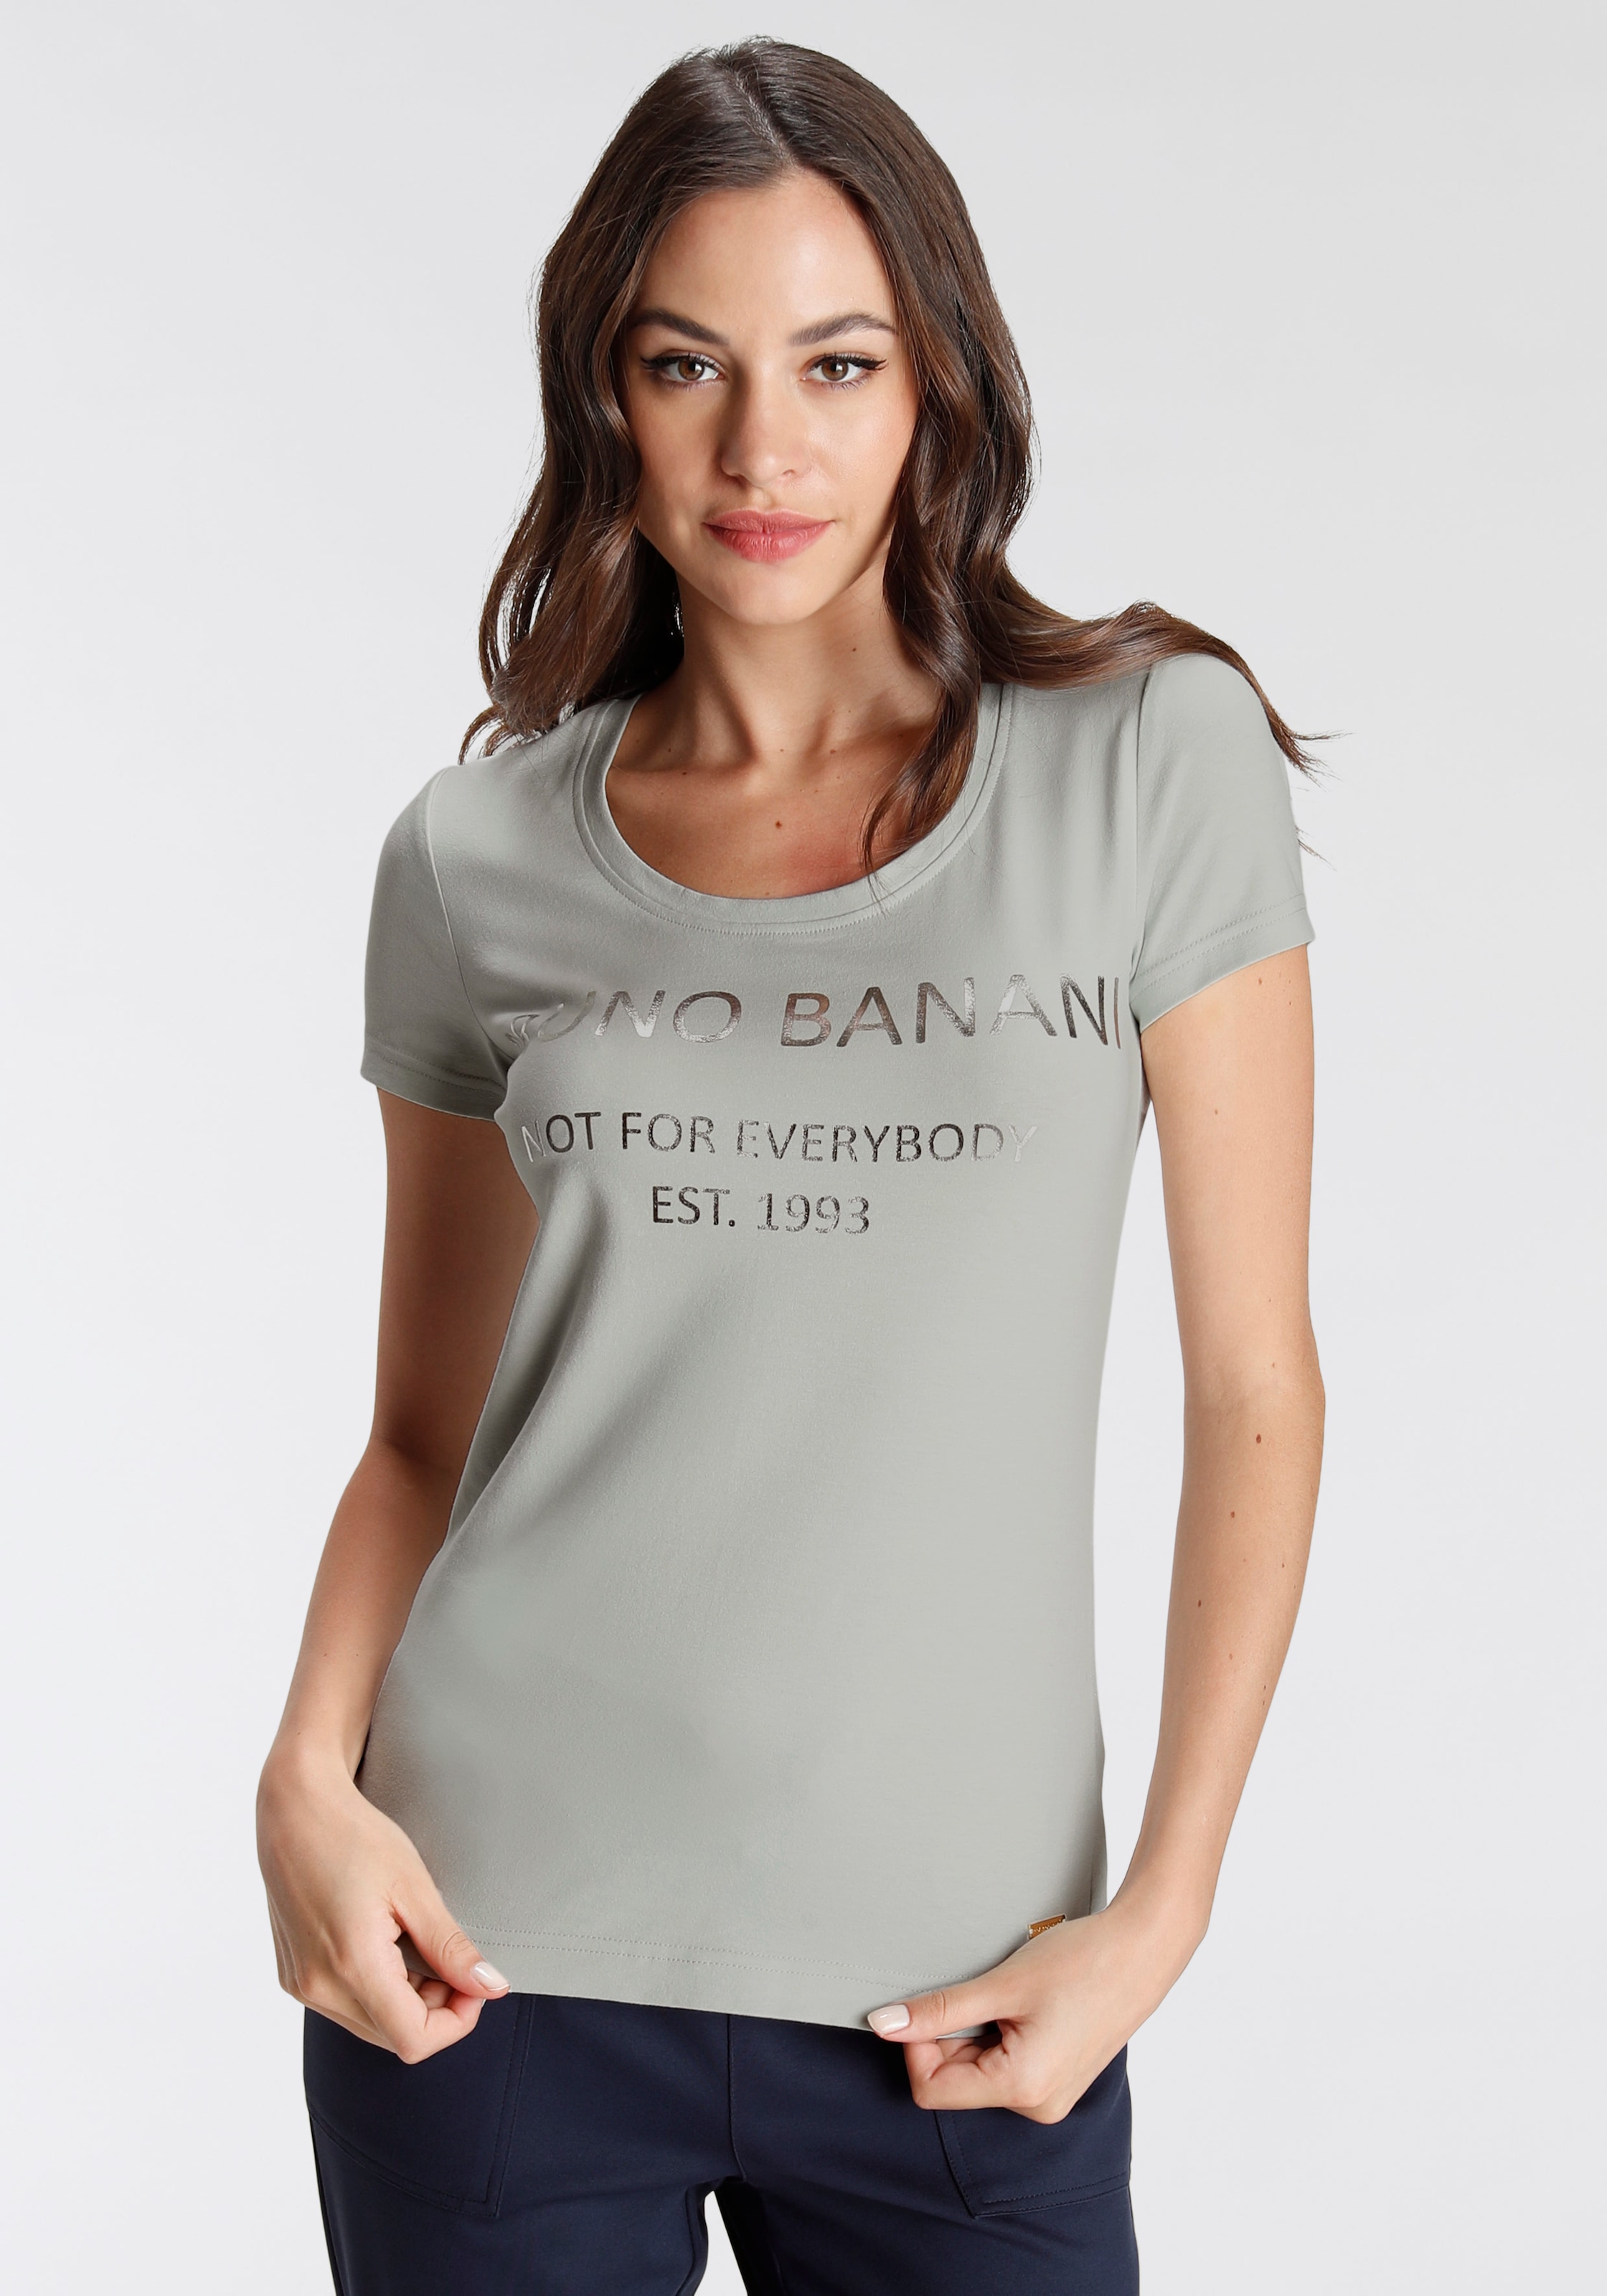 T-Shirt, Schweiz KOLLEKTION NEUE shoppen Logodruck Banani Bruno goldfarbenem mit Jelmoli-Versand bei online